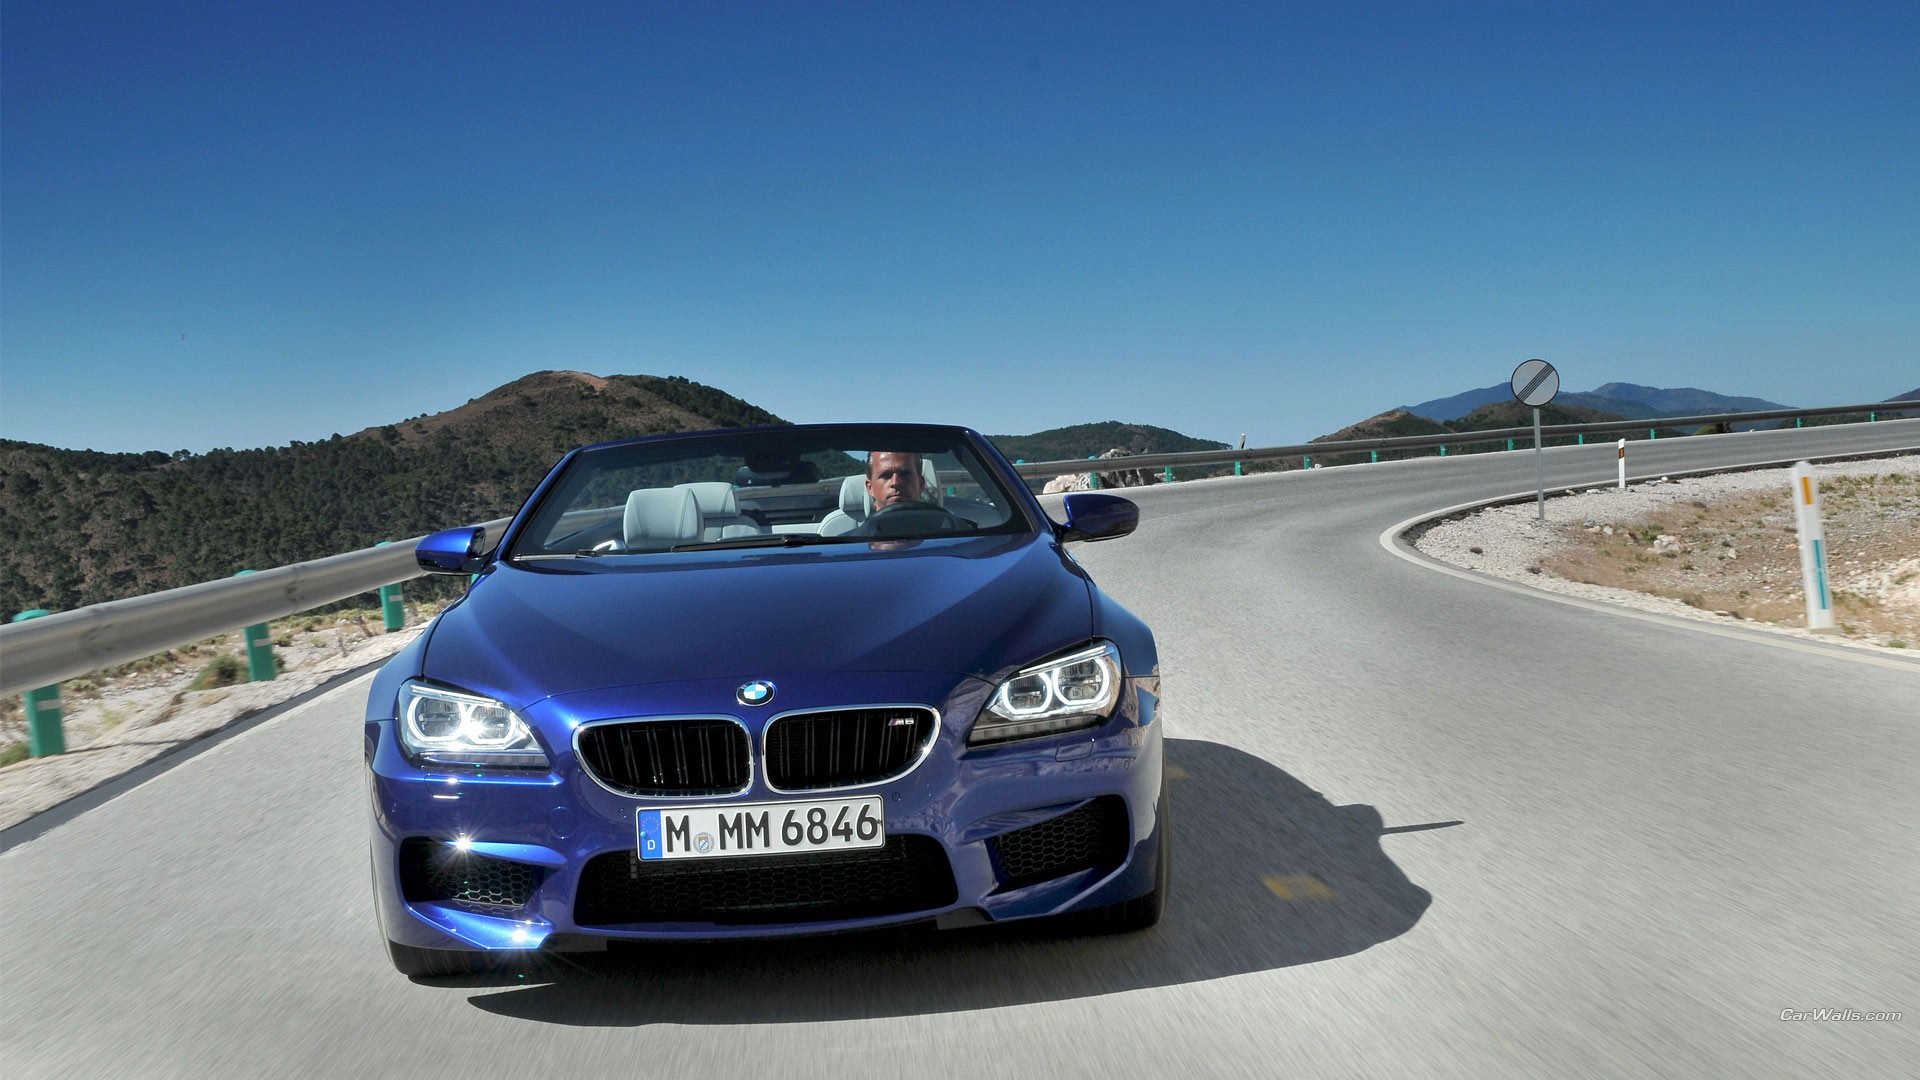 General 1920x1080 BMW M6 convertible car blue cars frontal view BMW F12/F13/F06 BMW 6 Series vehicle BMW